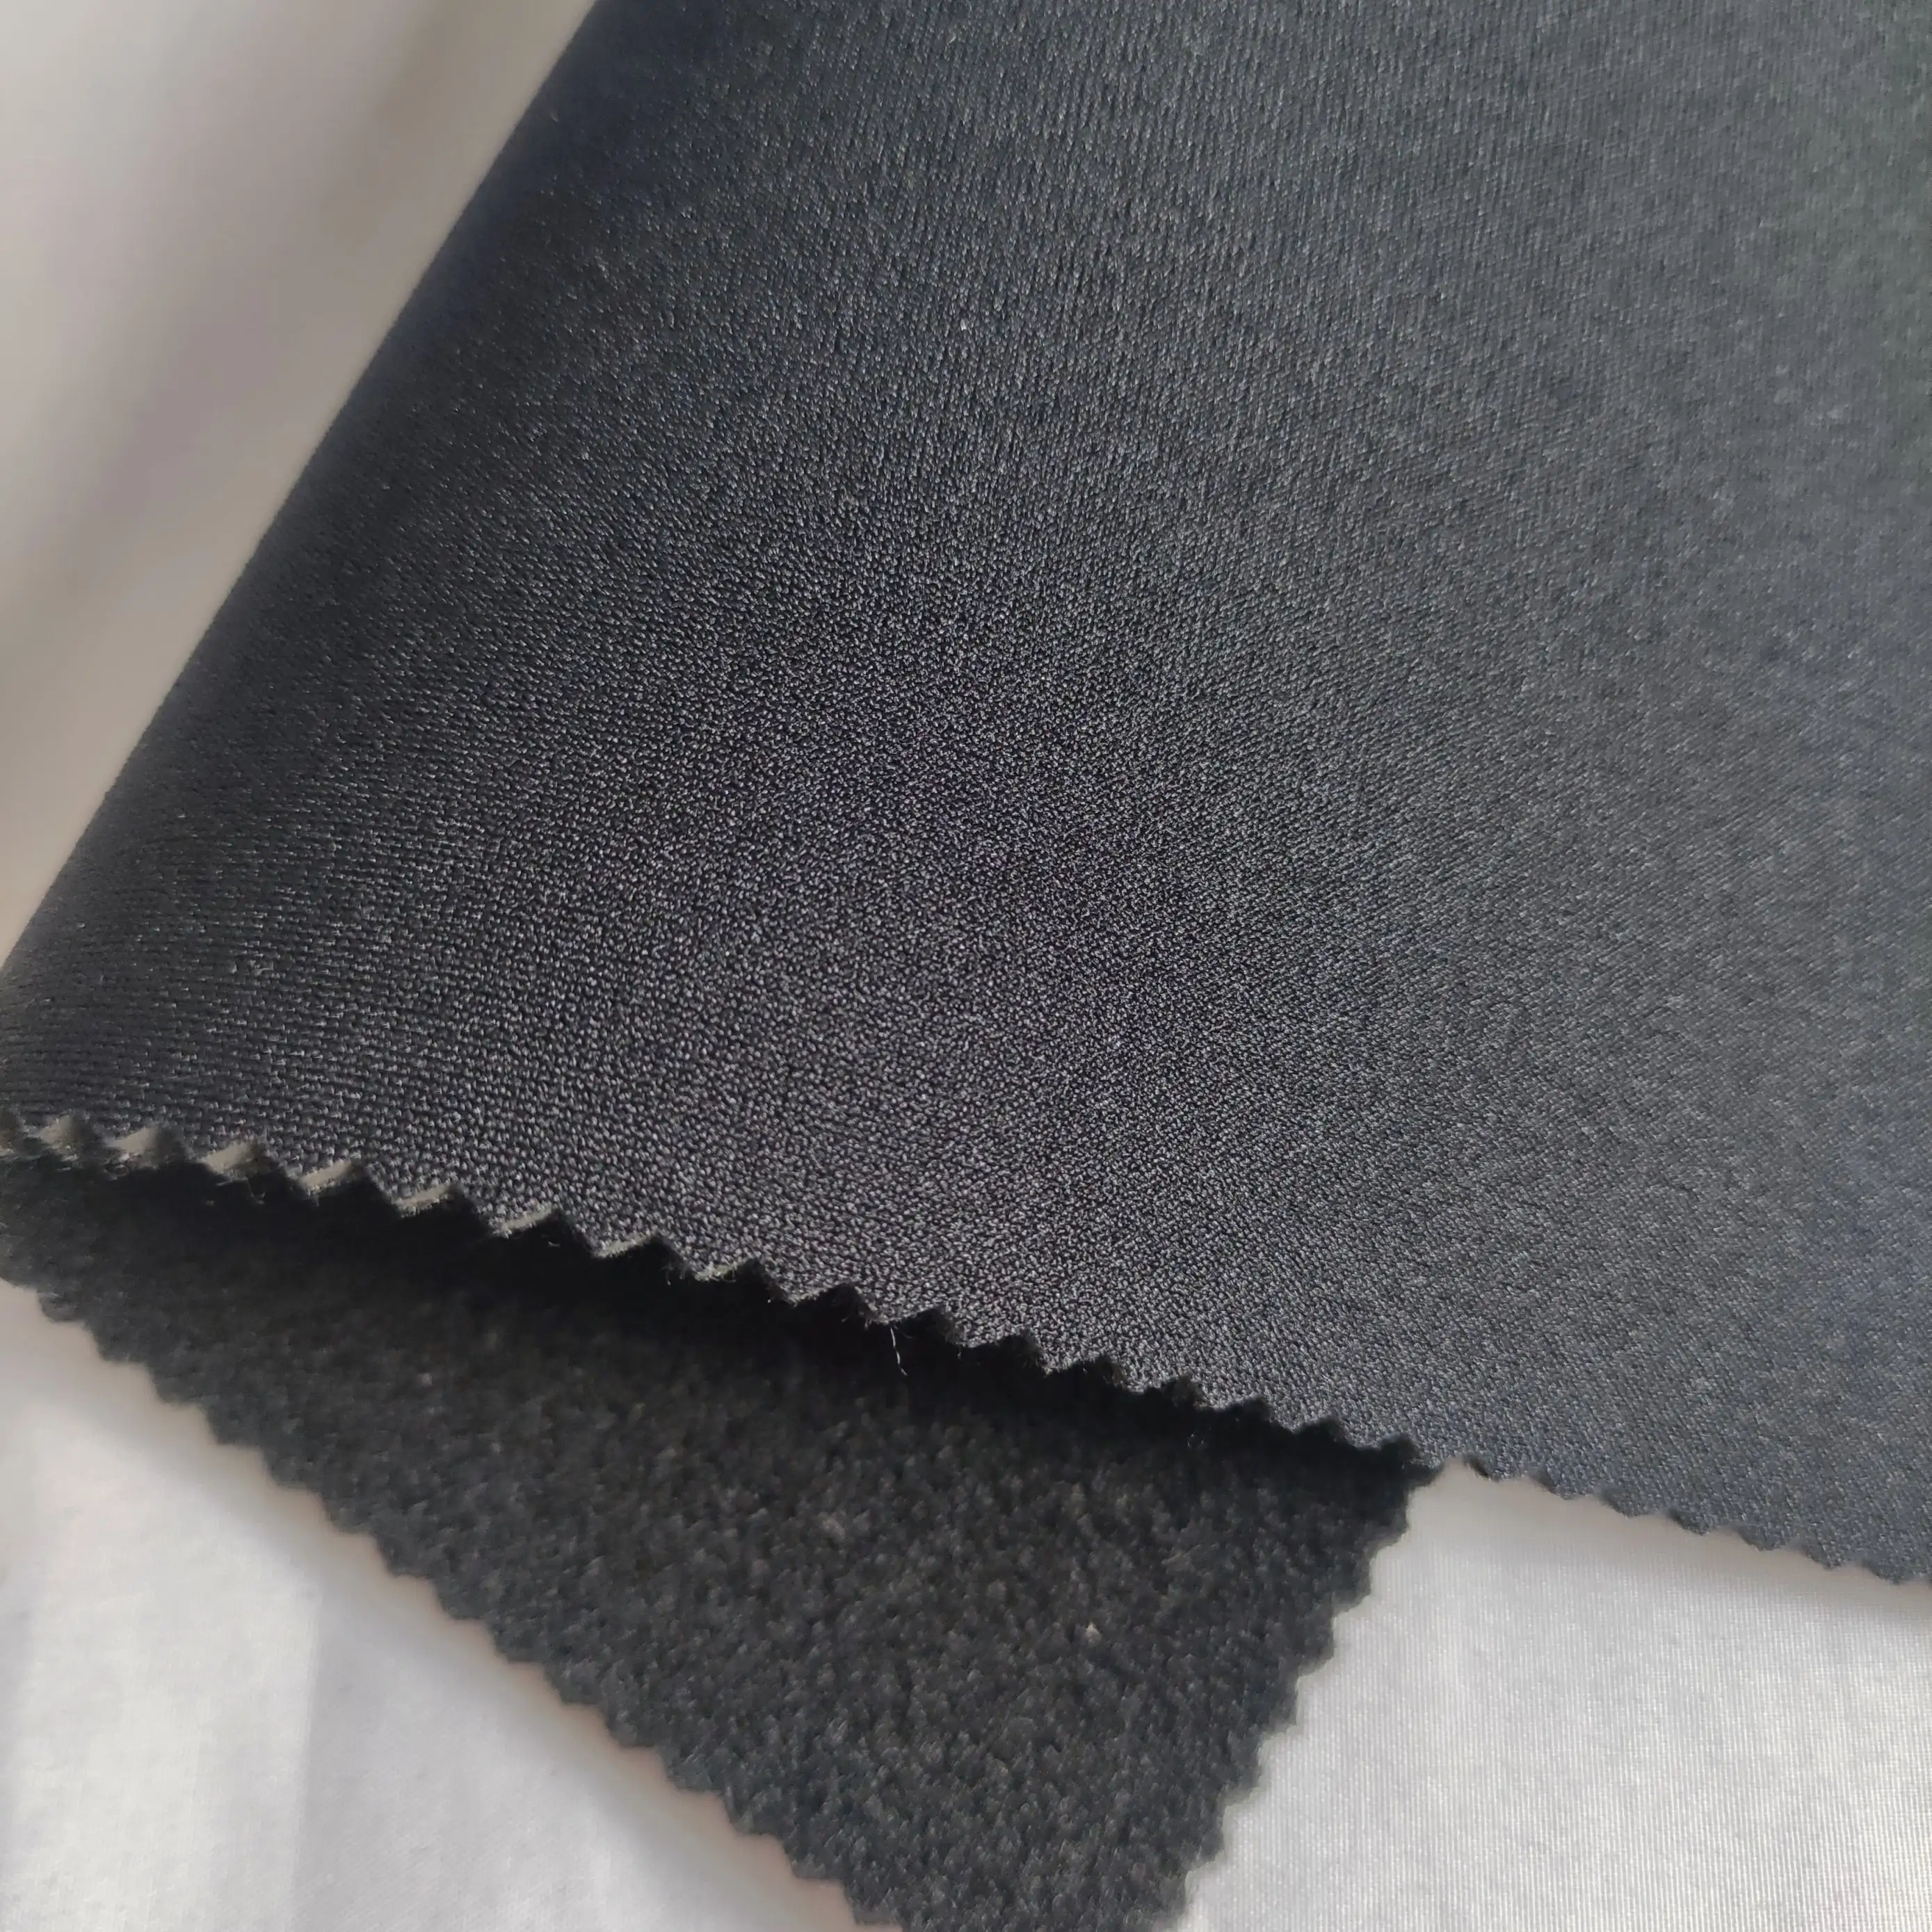 UOO Neoprene 3MM Imitated OK Cloth UBL Loop Neoprene Fabric With Nylon Fabric For Orthopedic Products